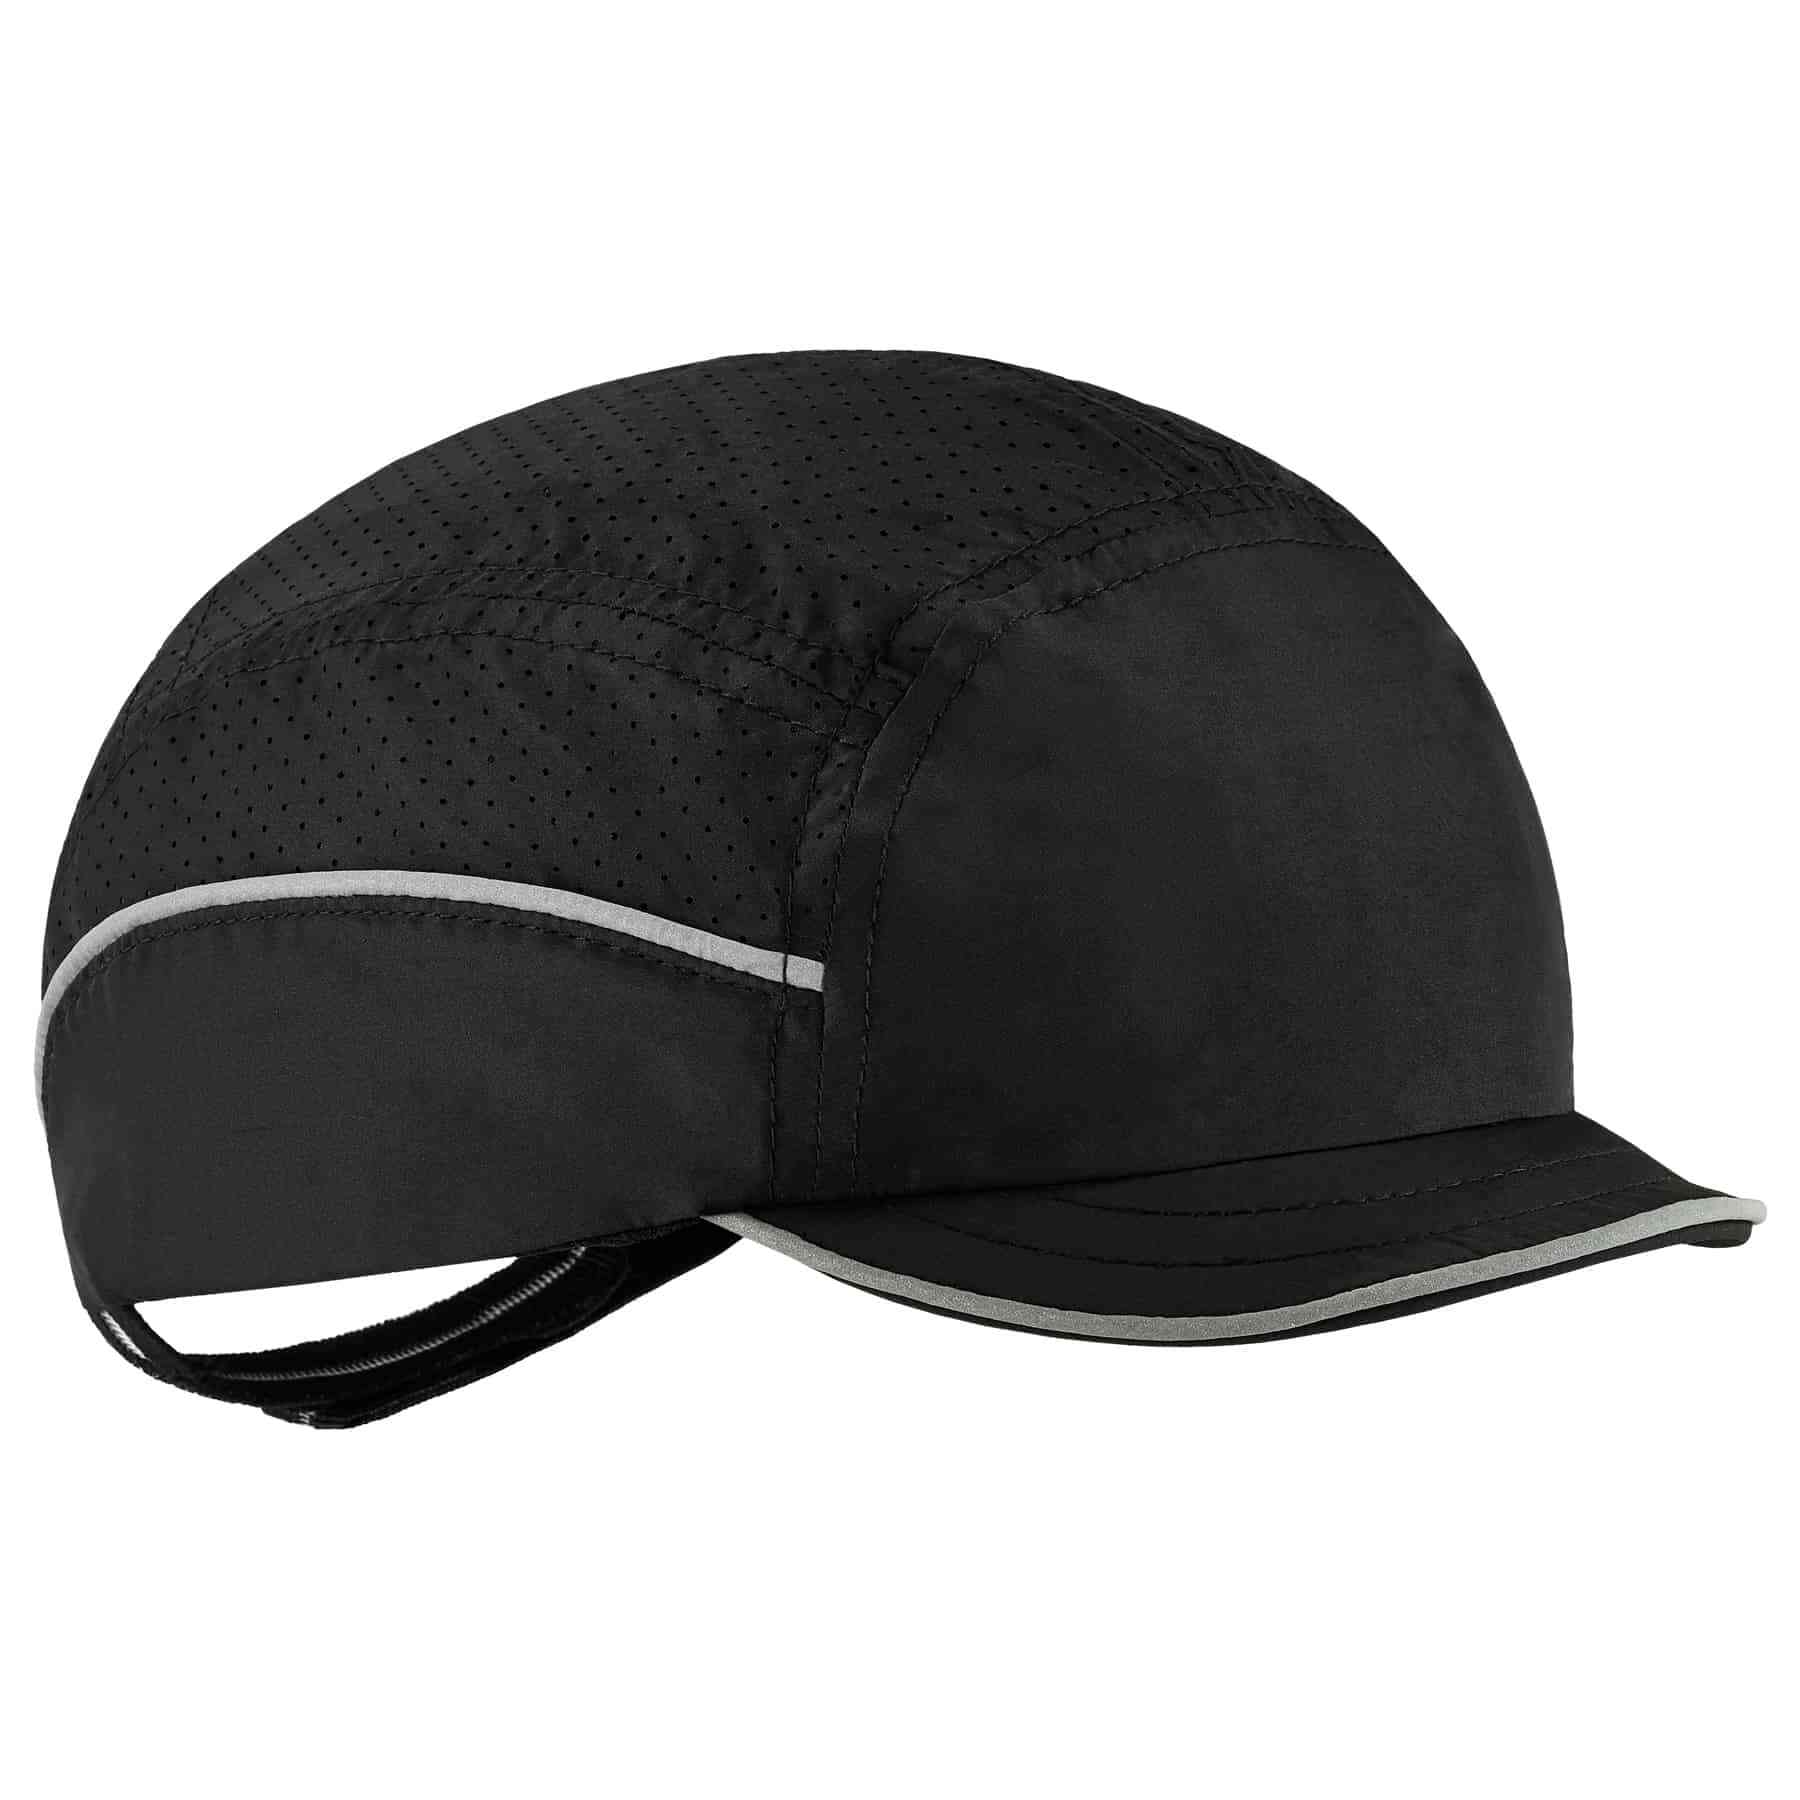 Ergodyne Micro Brim Black Skullerz 8955 Lightweight Bump Cap Hat